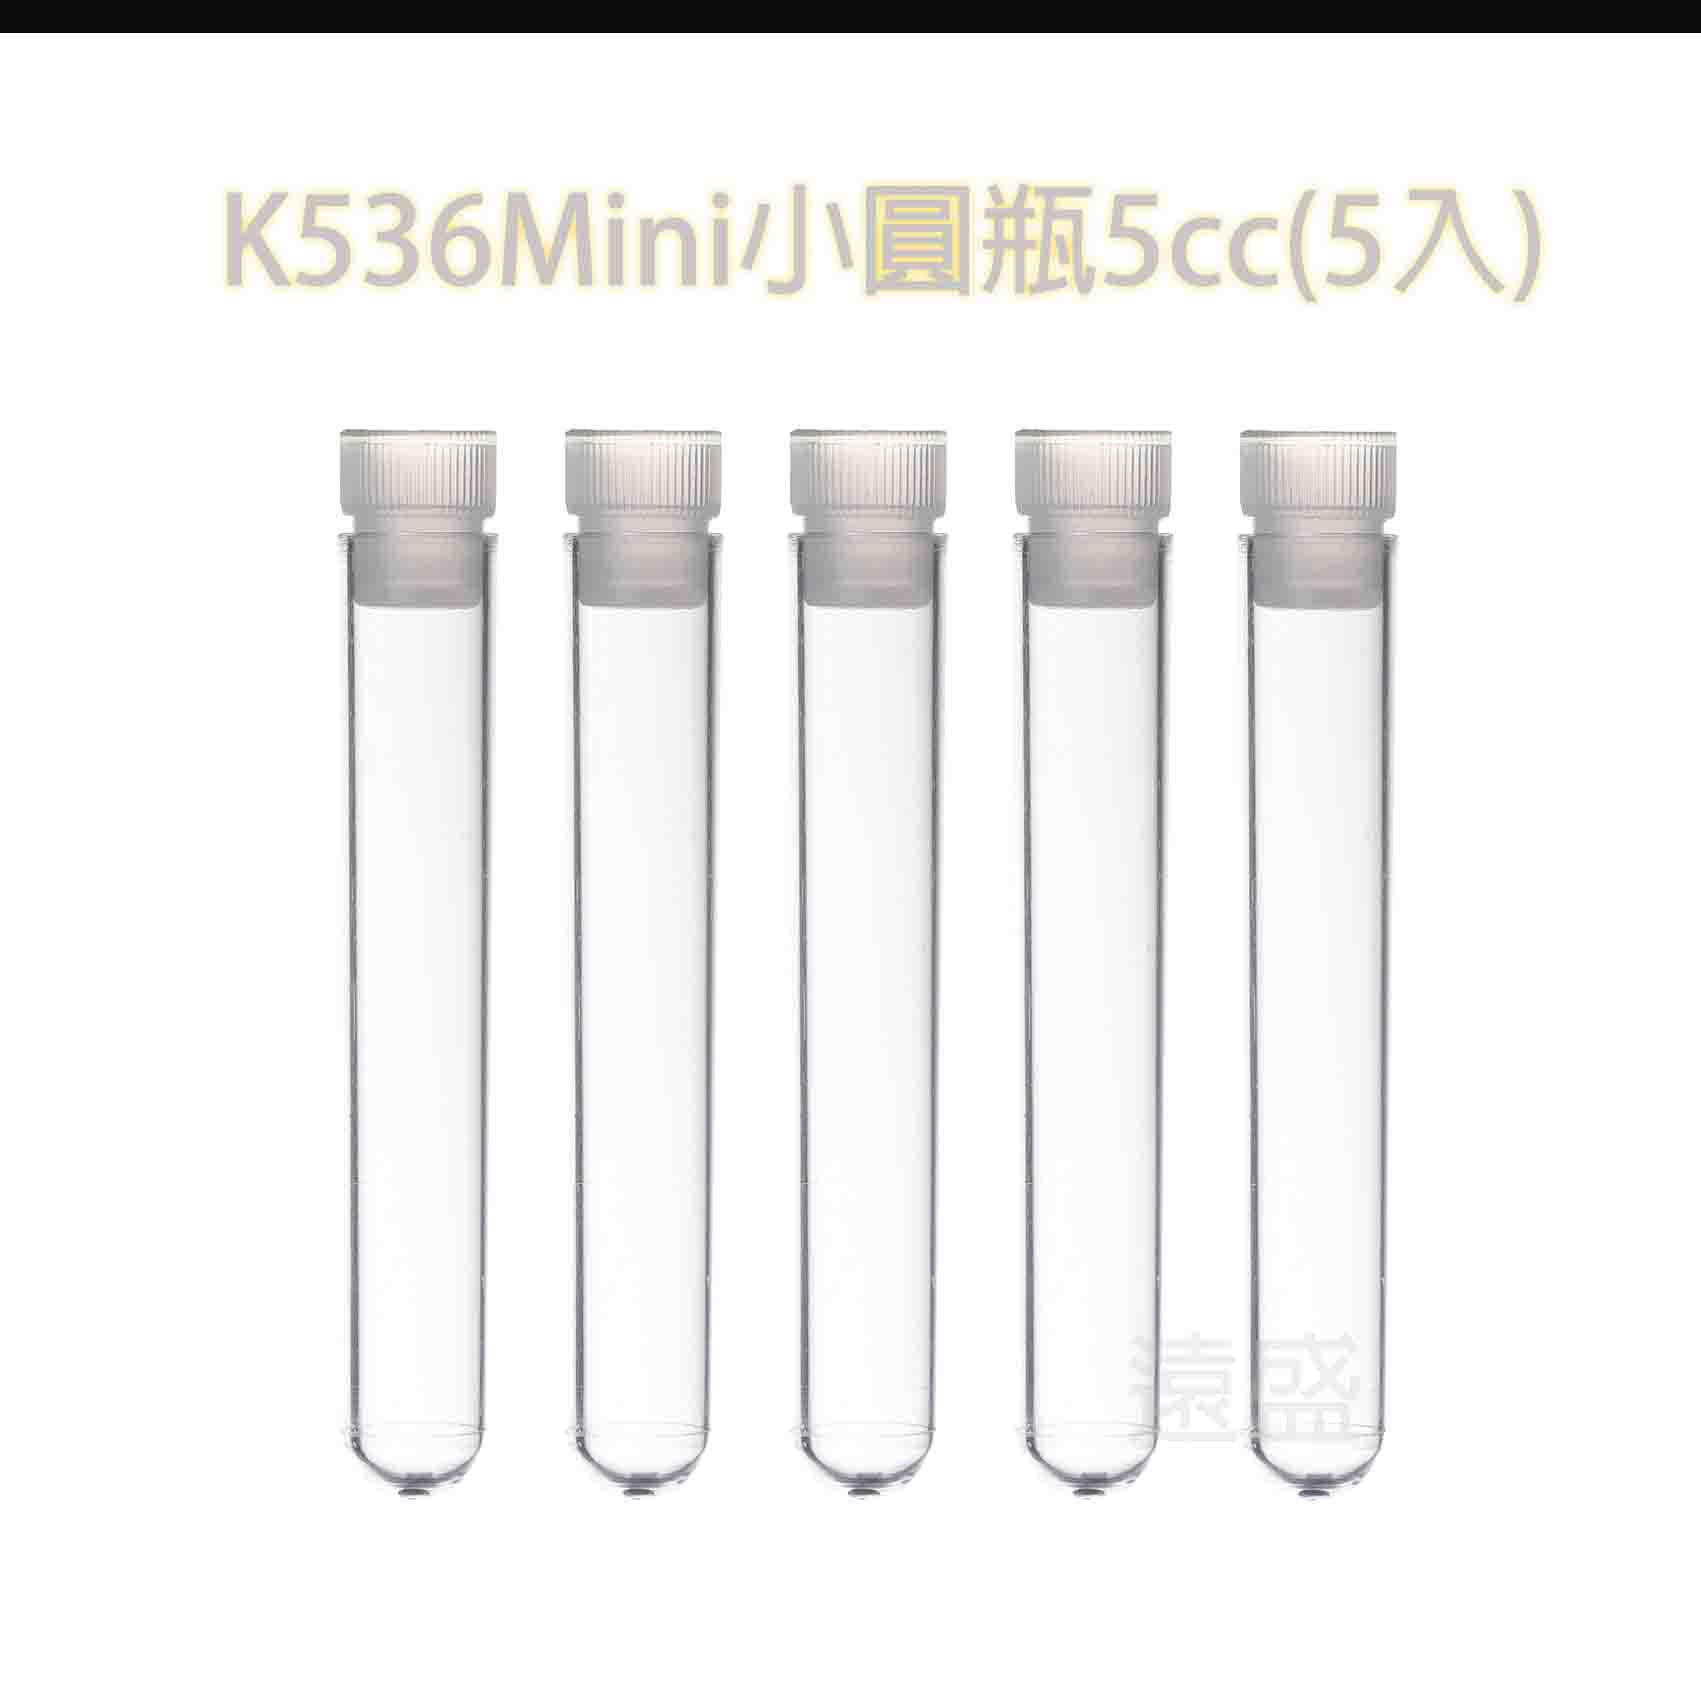 K536Mini小圓瓶5cc(5入)